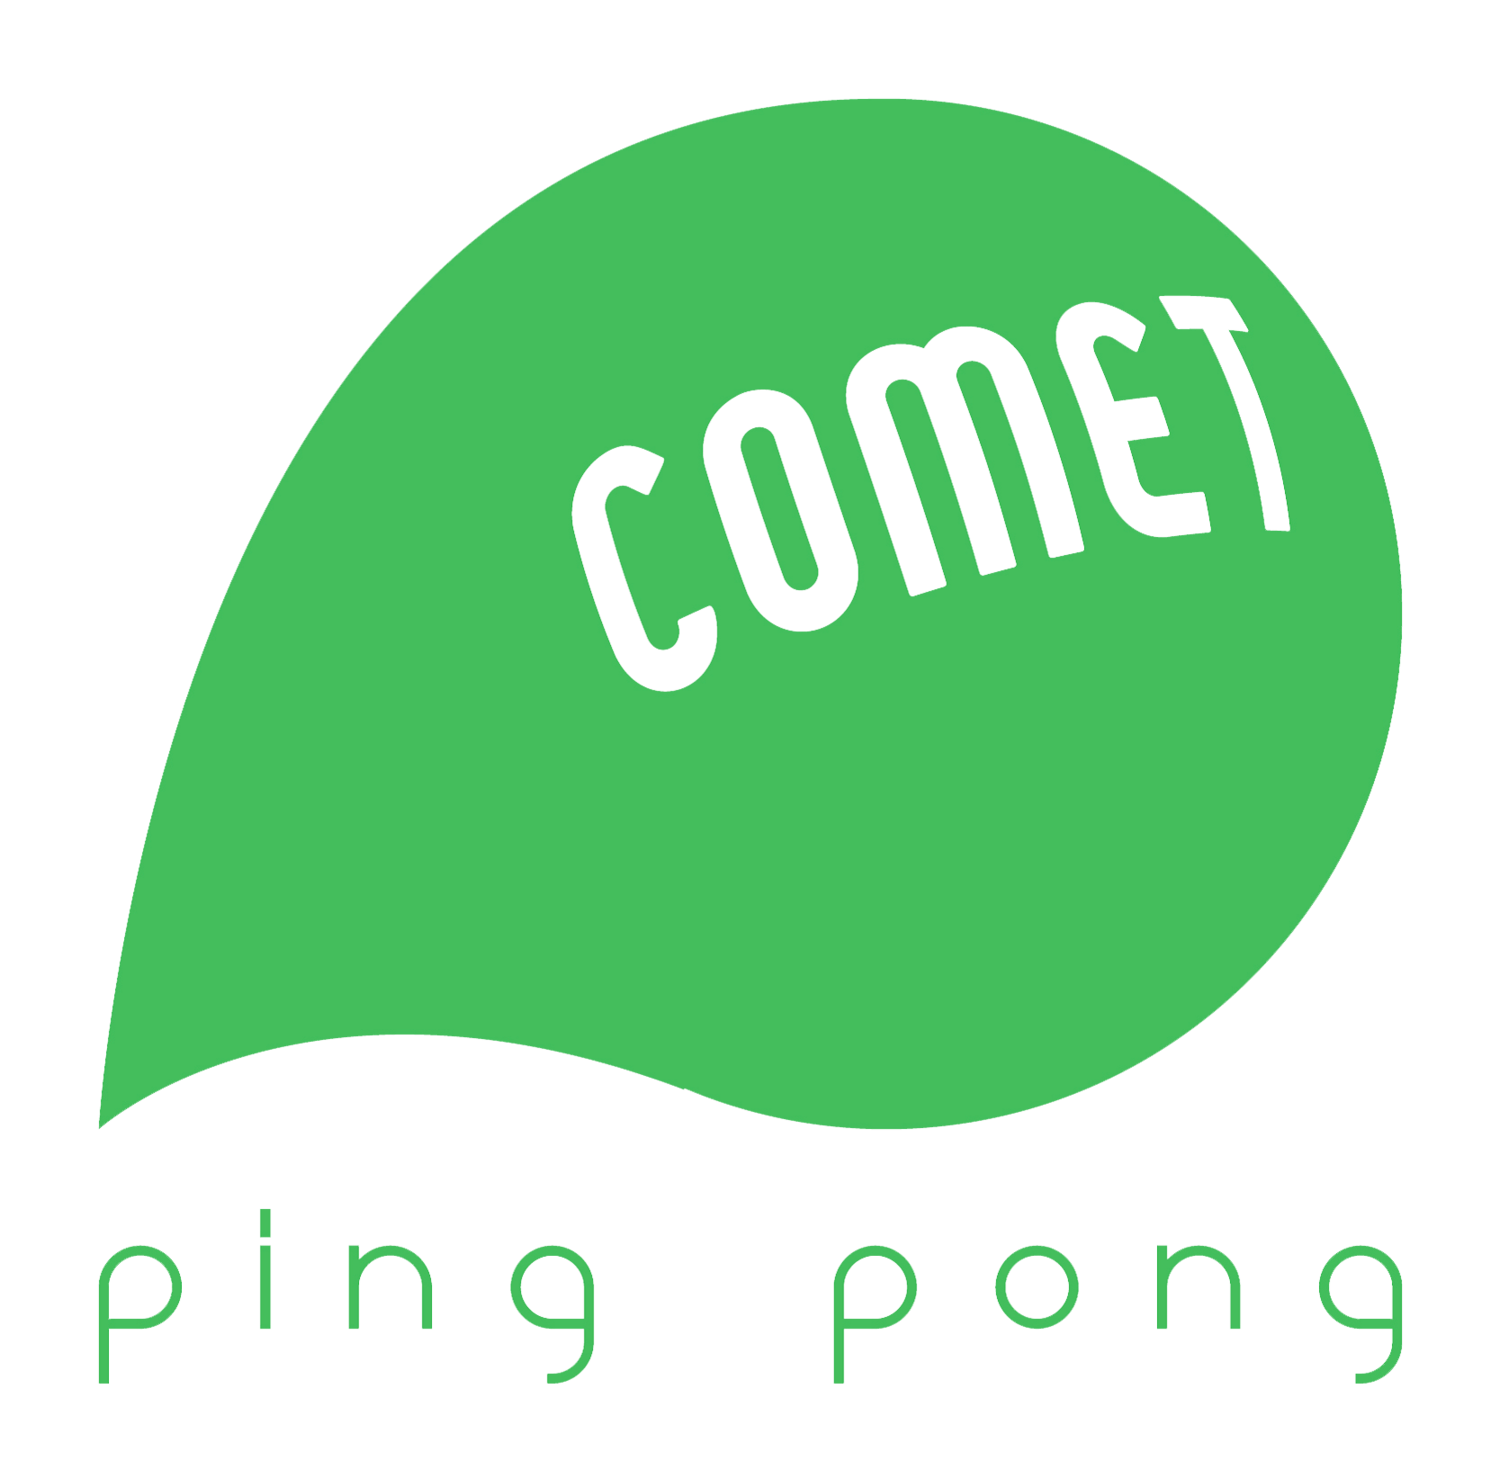 comet ping pong logo